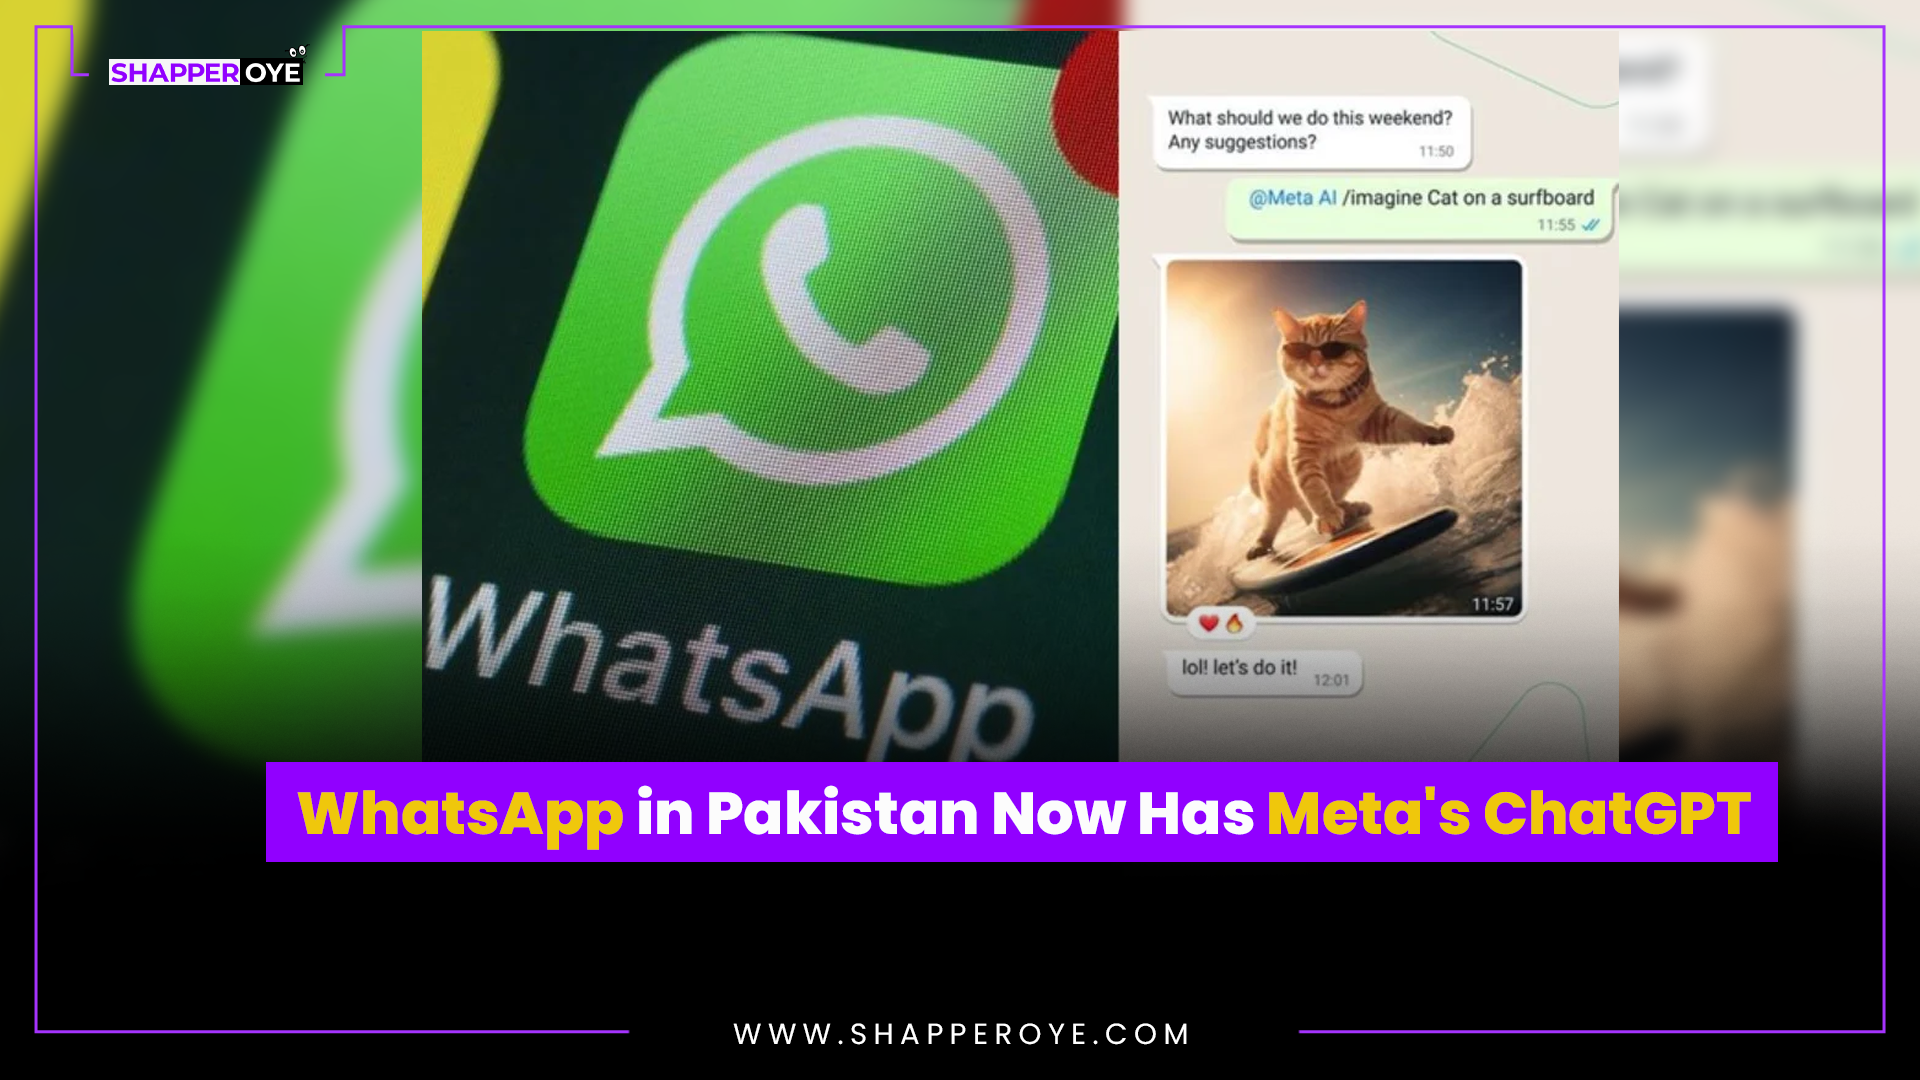 WhatsApp in Pakistan Now Has Meta's ChatGPT